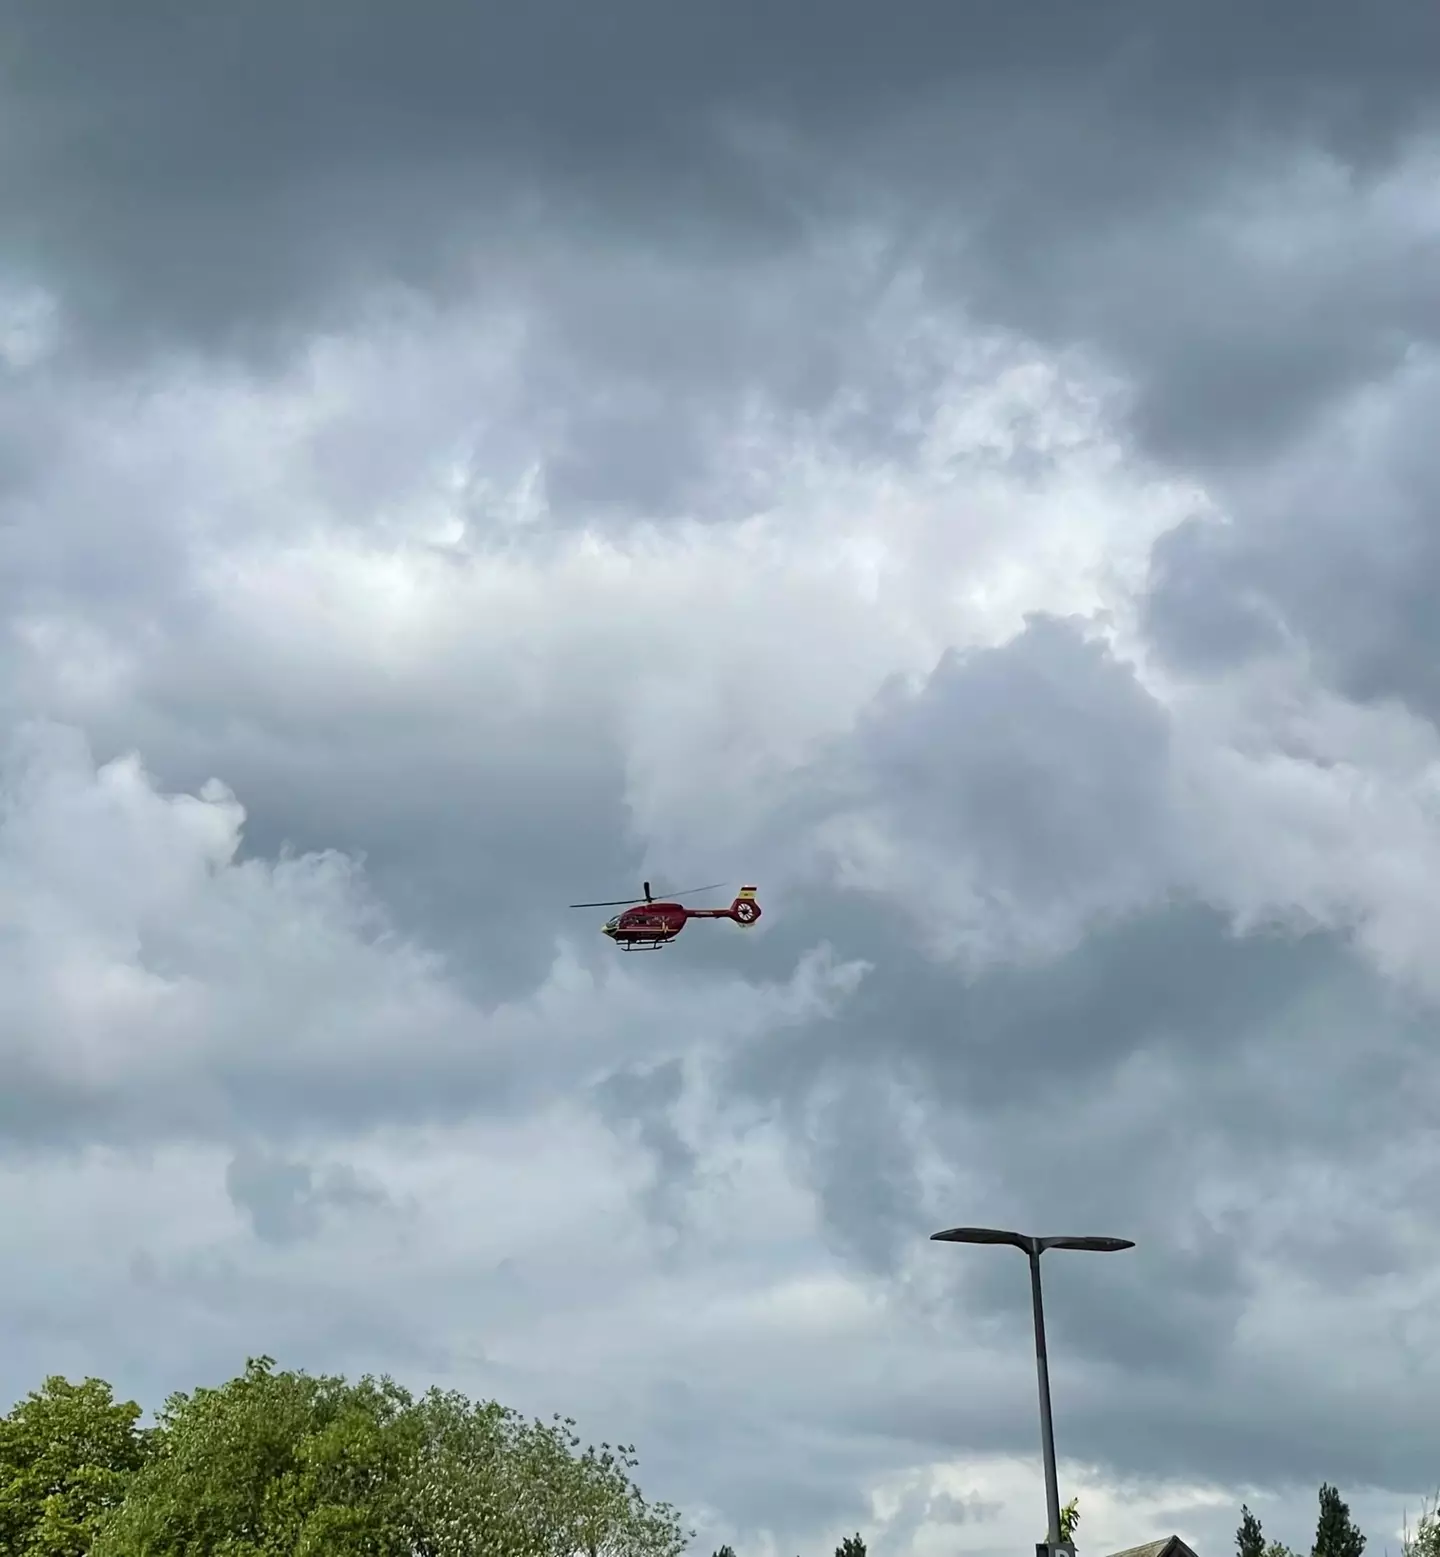 An air ambulance was seen landing near the Stoke-on-Trent Waterworld.